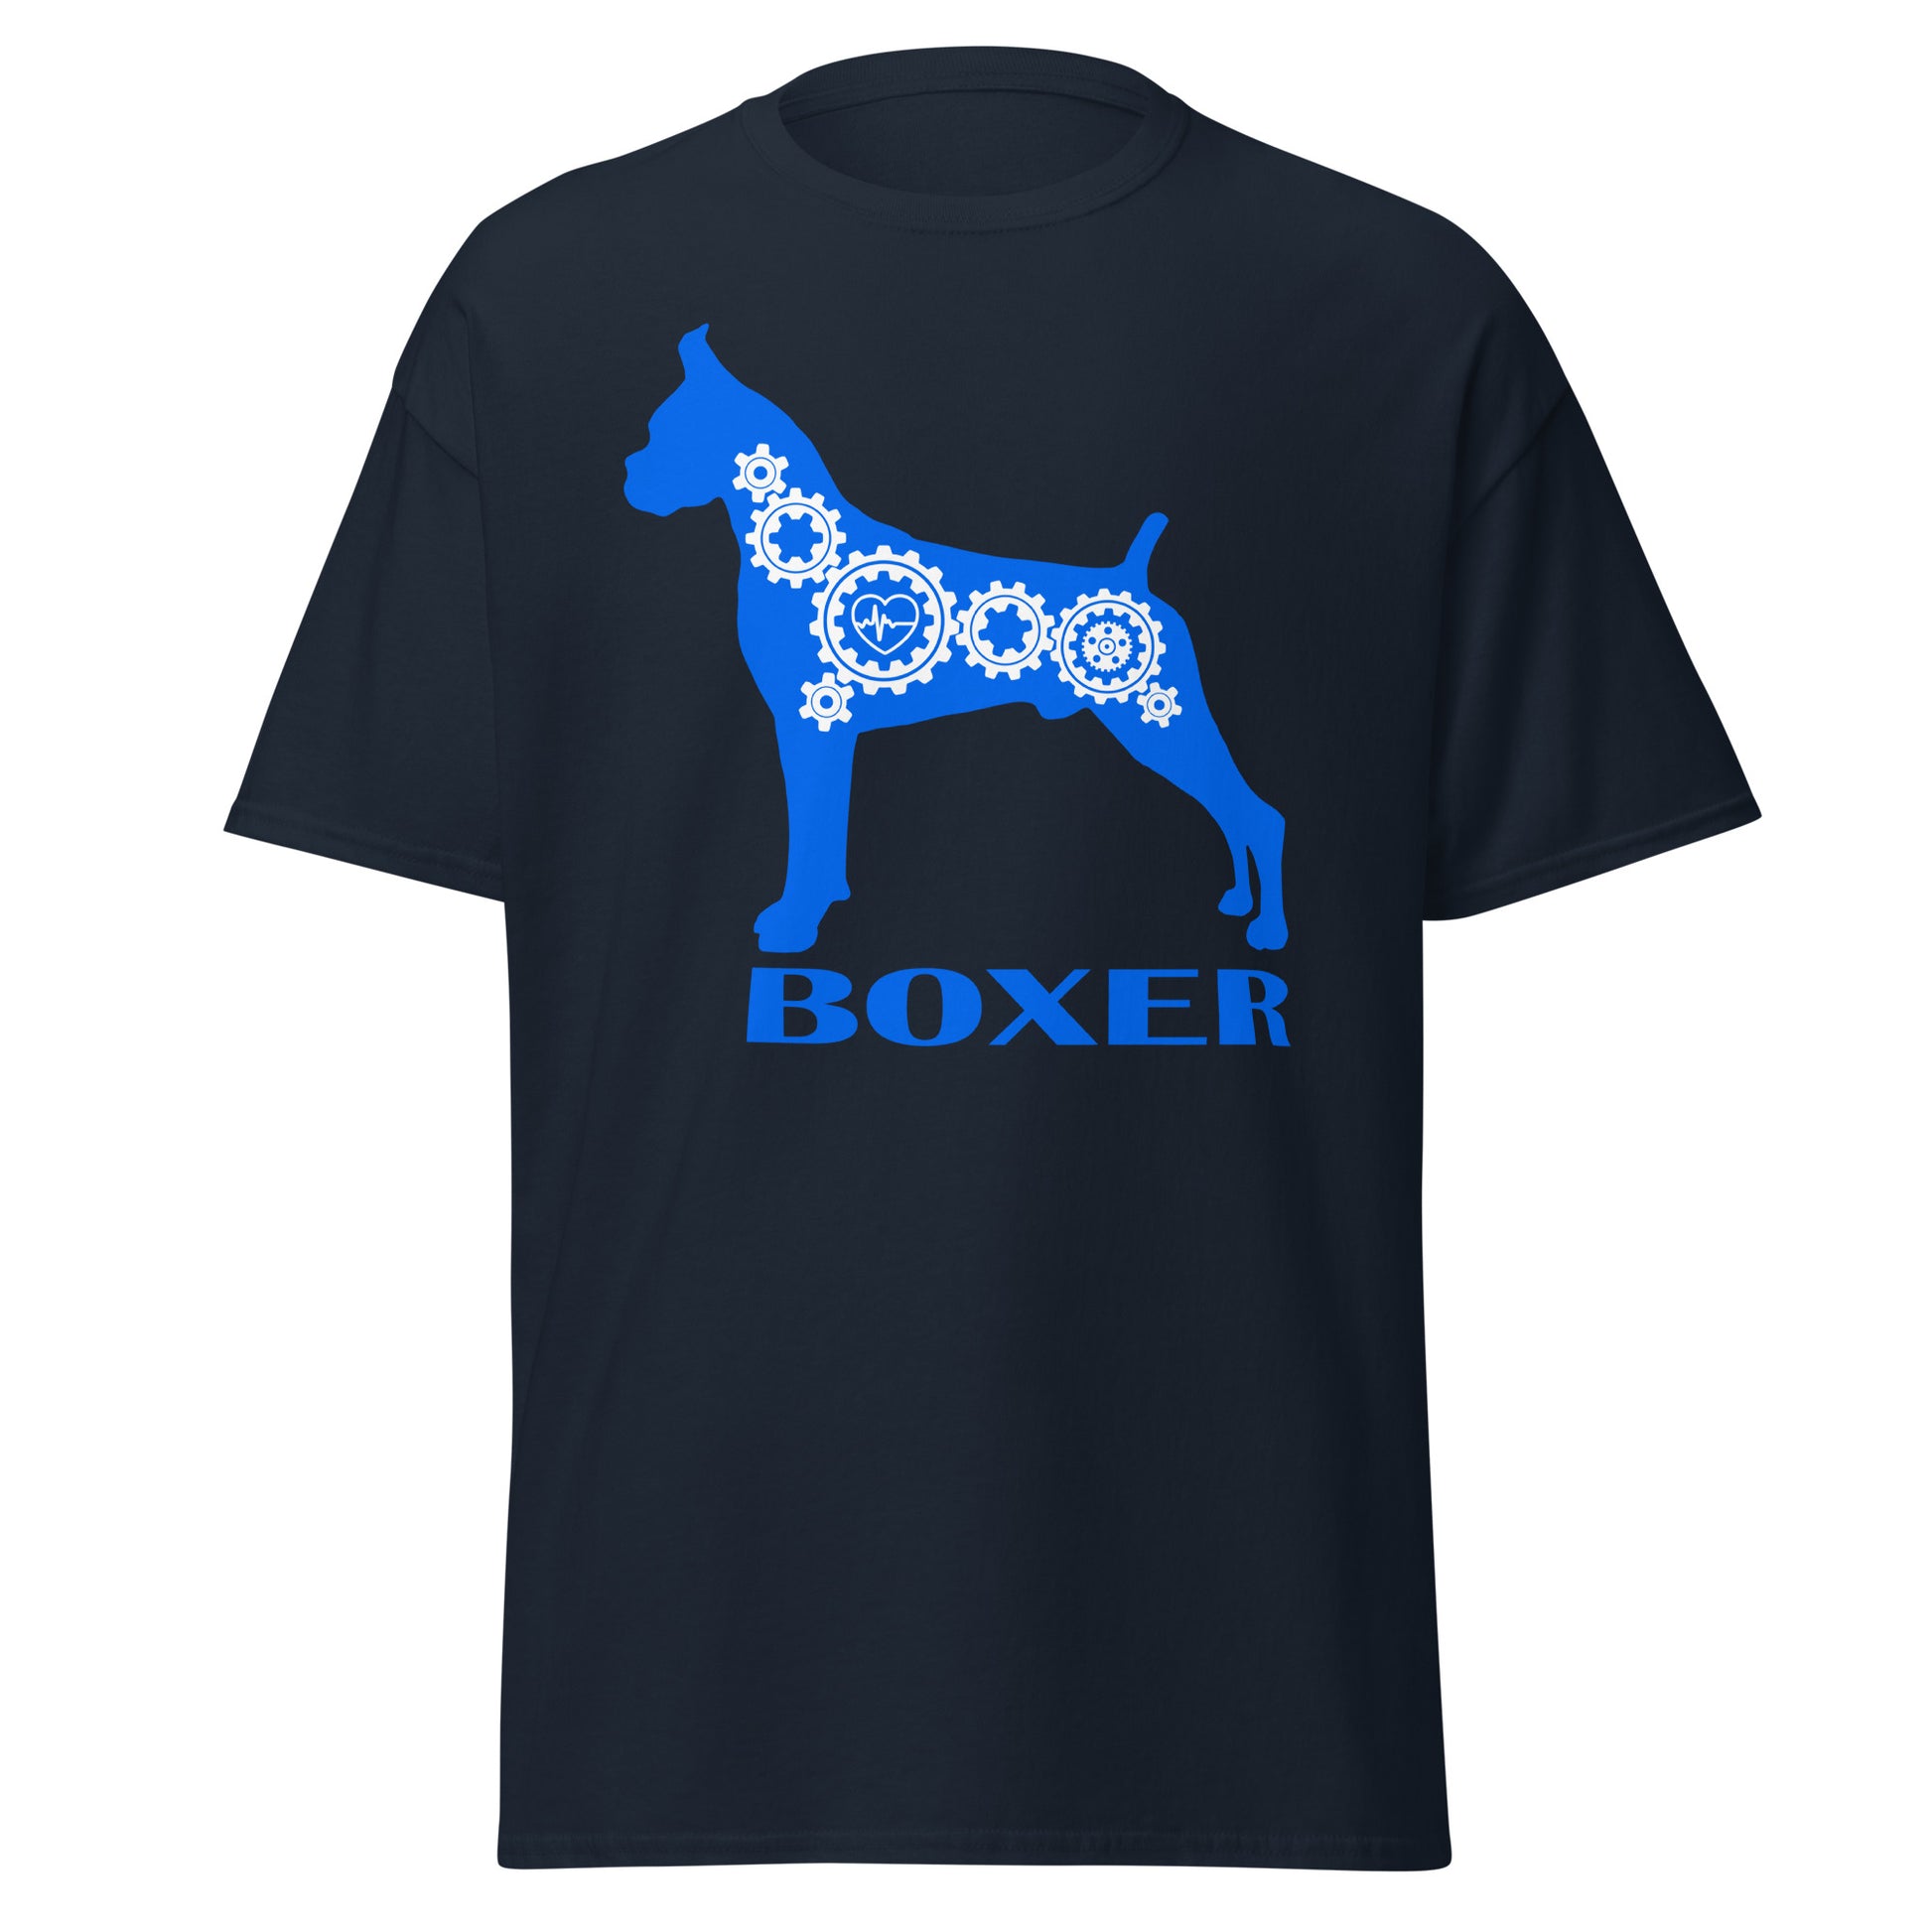 Boxer Bionic men’s navy t-shirt by Dog Artistry.